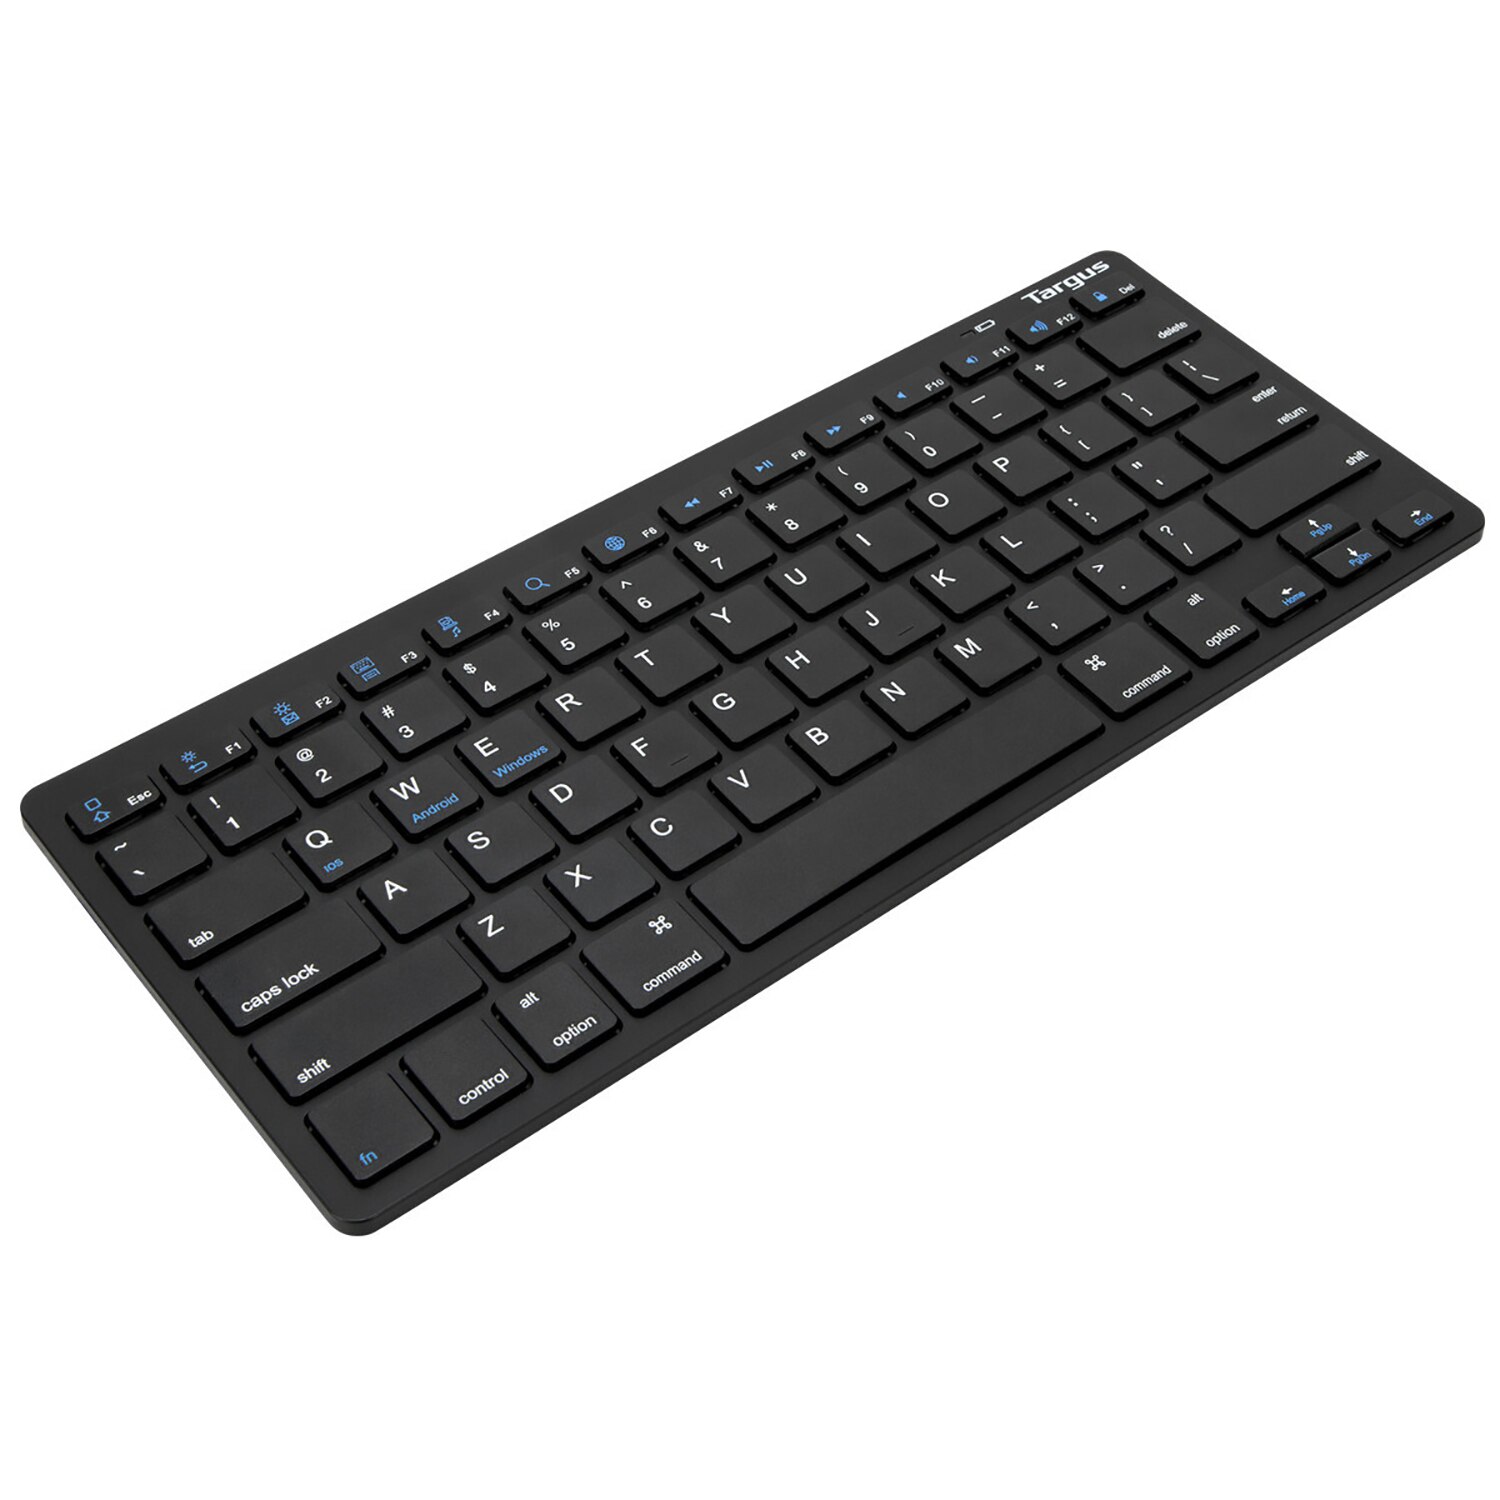 Targus Kb55 Multi Platform Wireless Bluetooth Keyboard In Black